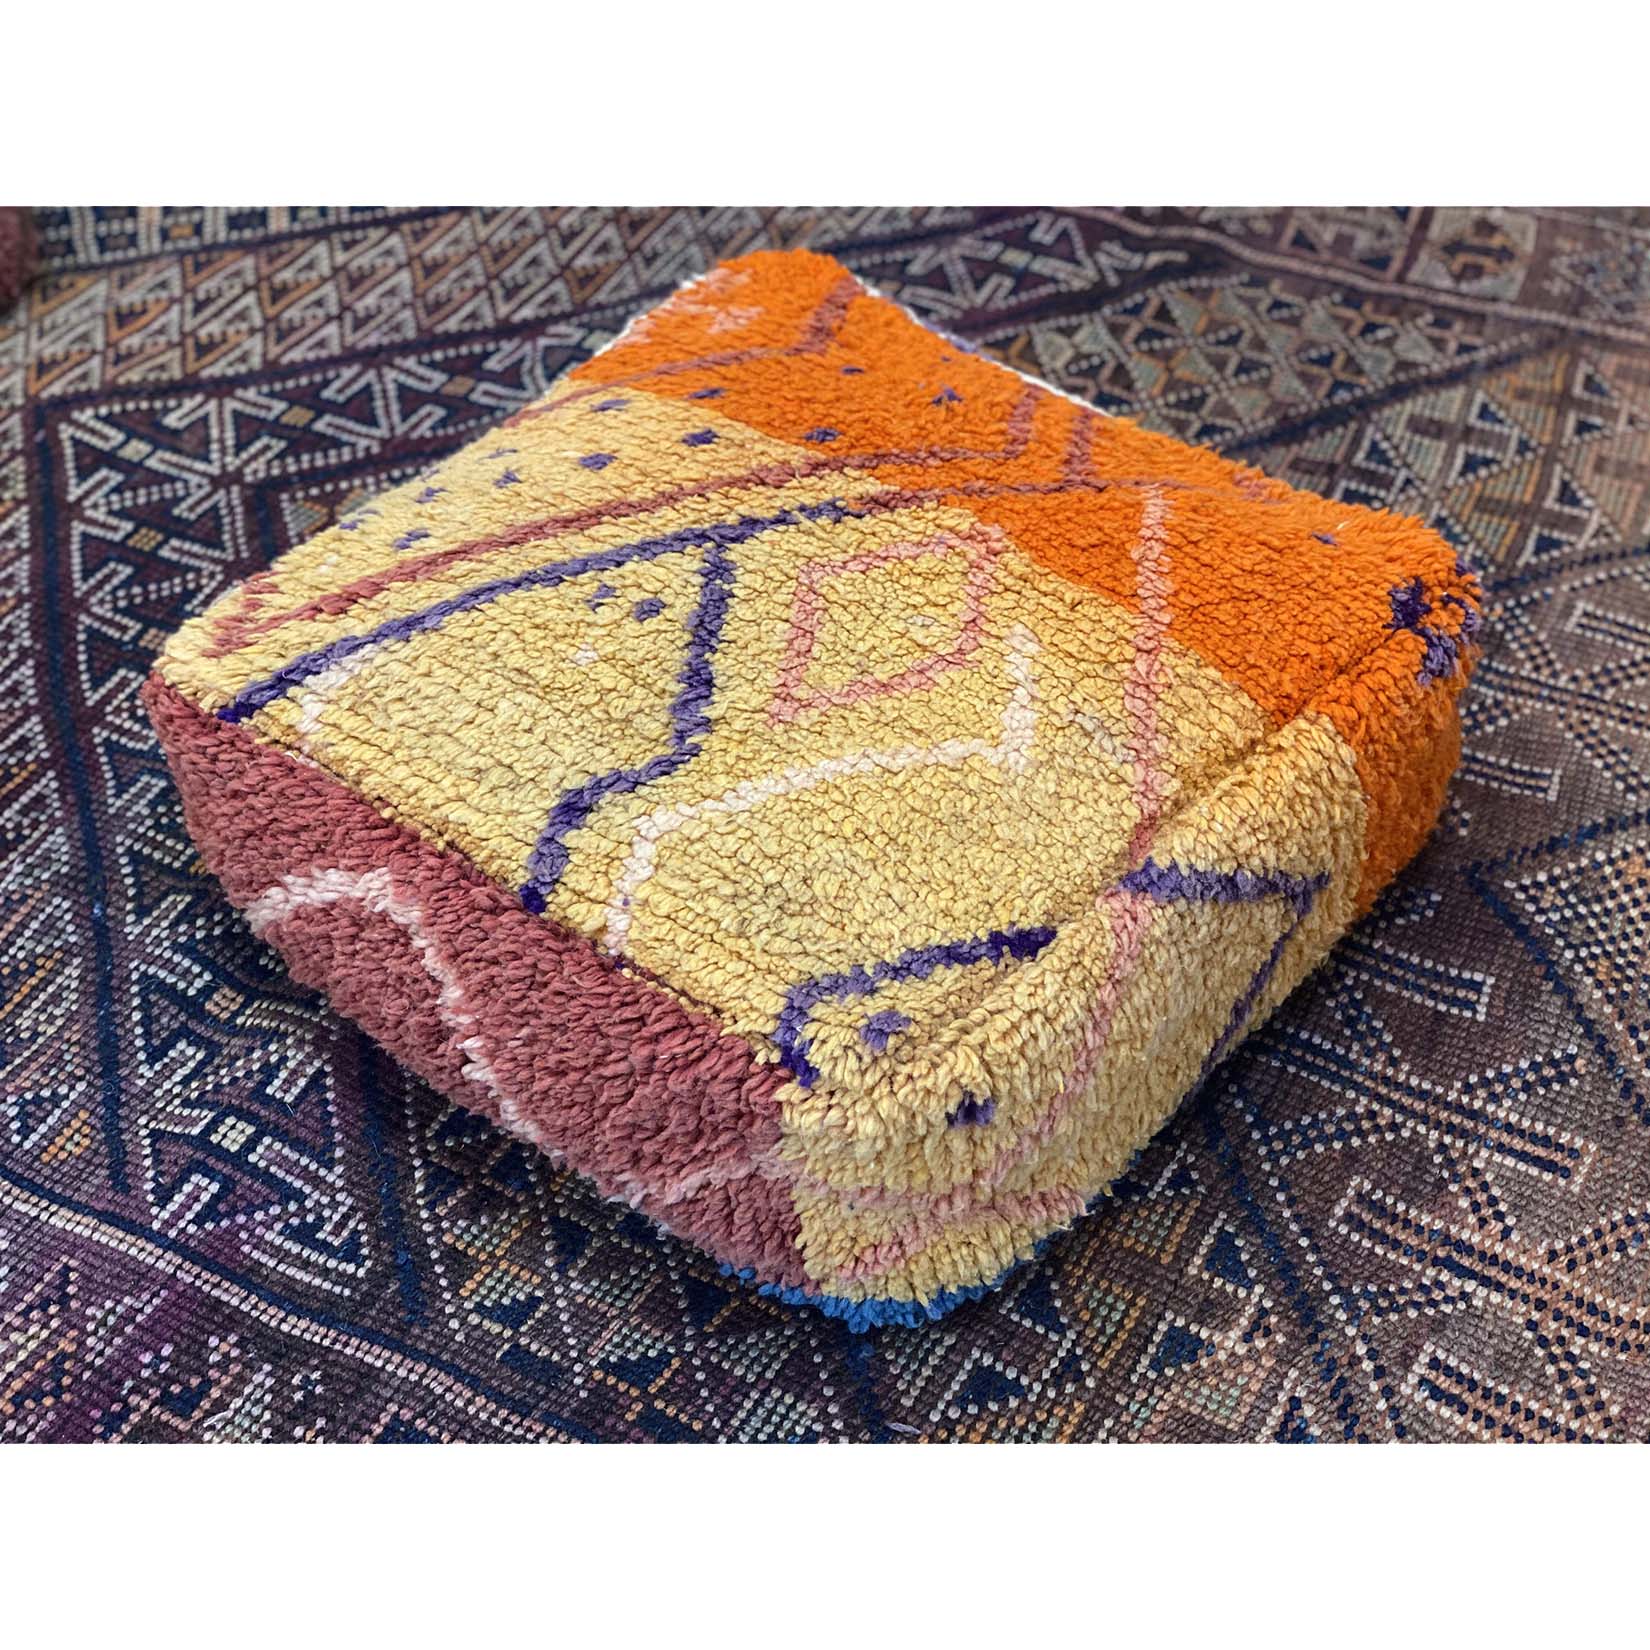 Yellow and orange Moroccan floor pouf with geometric pattern design - Kantara | Moroccan Rugs